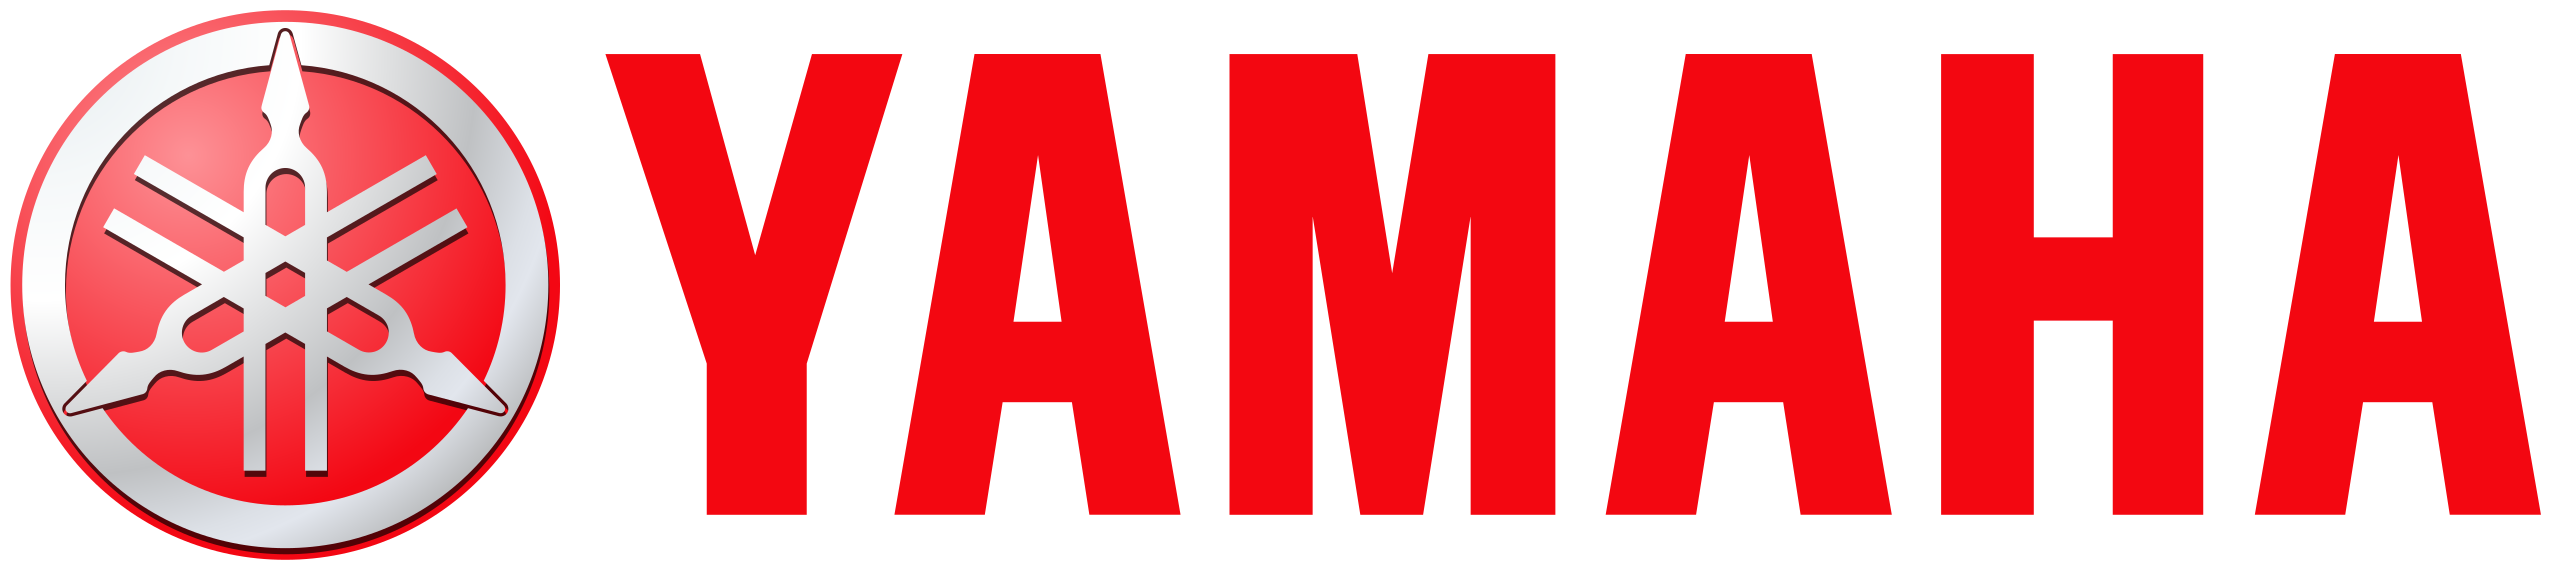 logo yamaha.svg